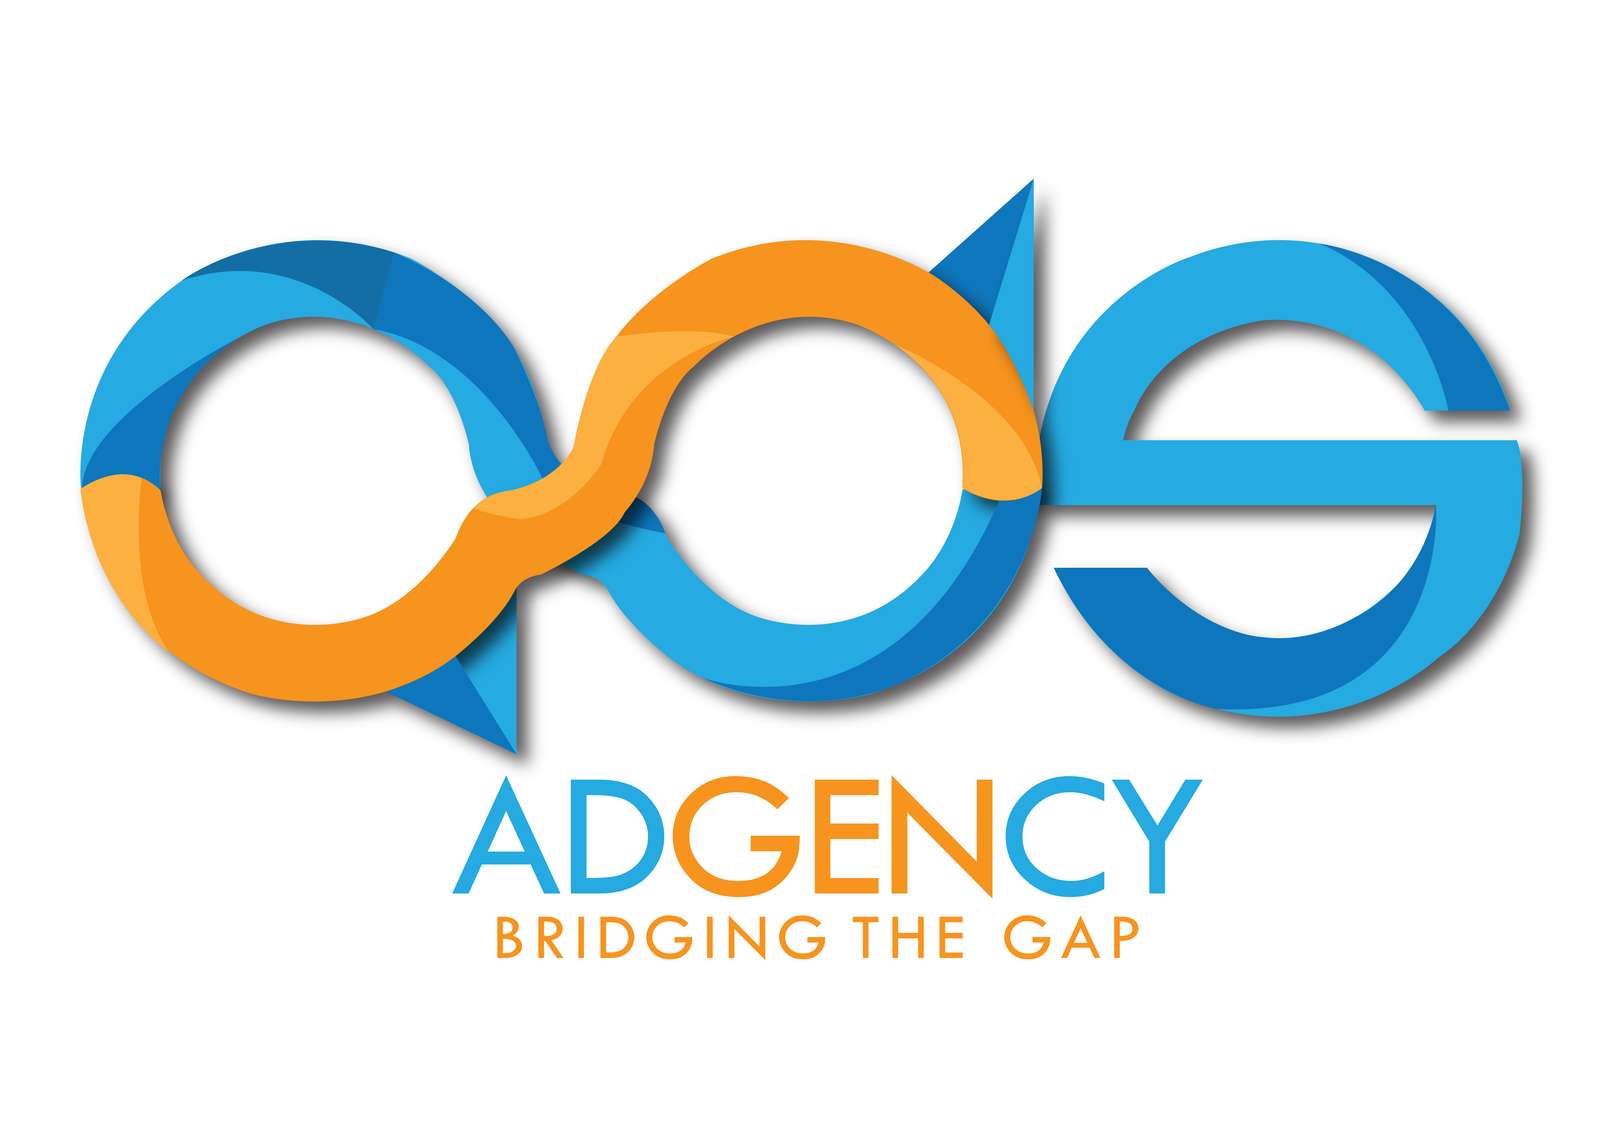 Adgency logo online puzzle